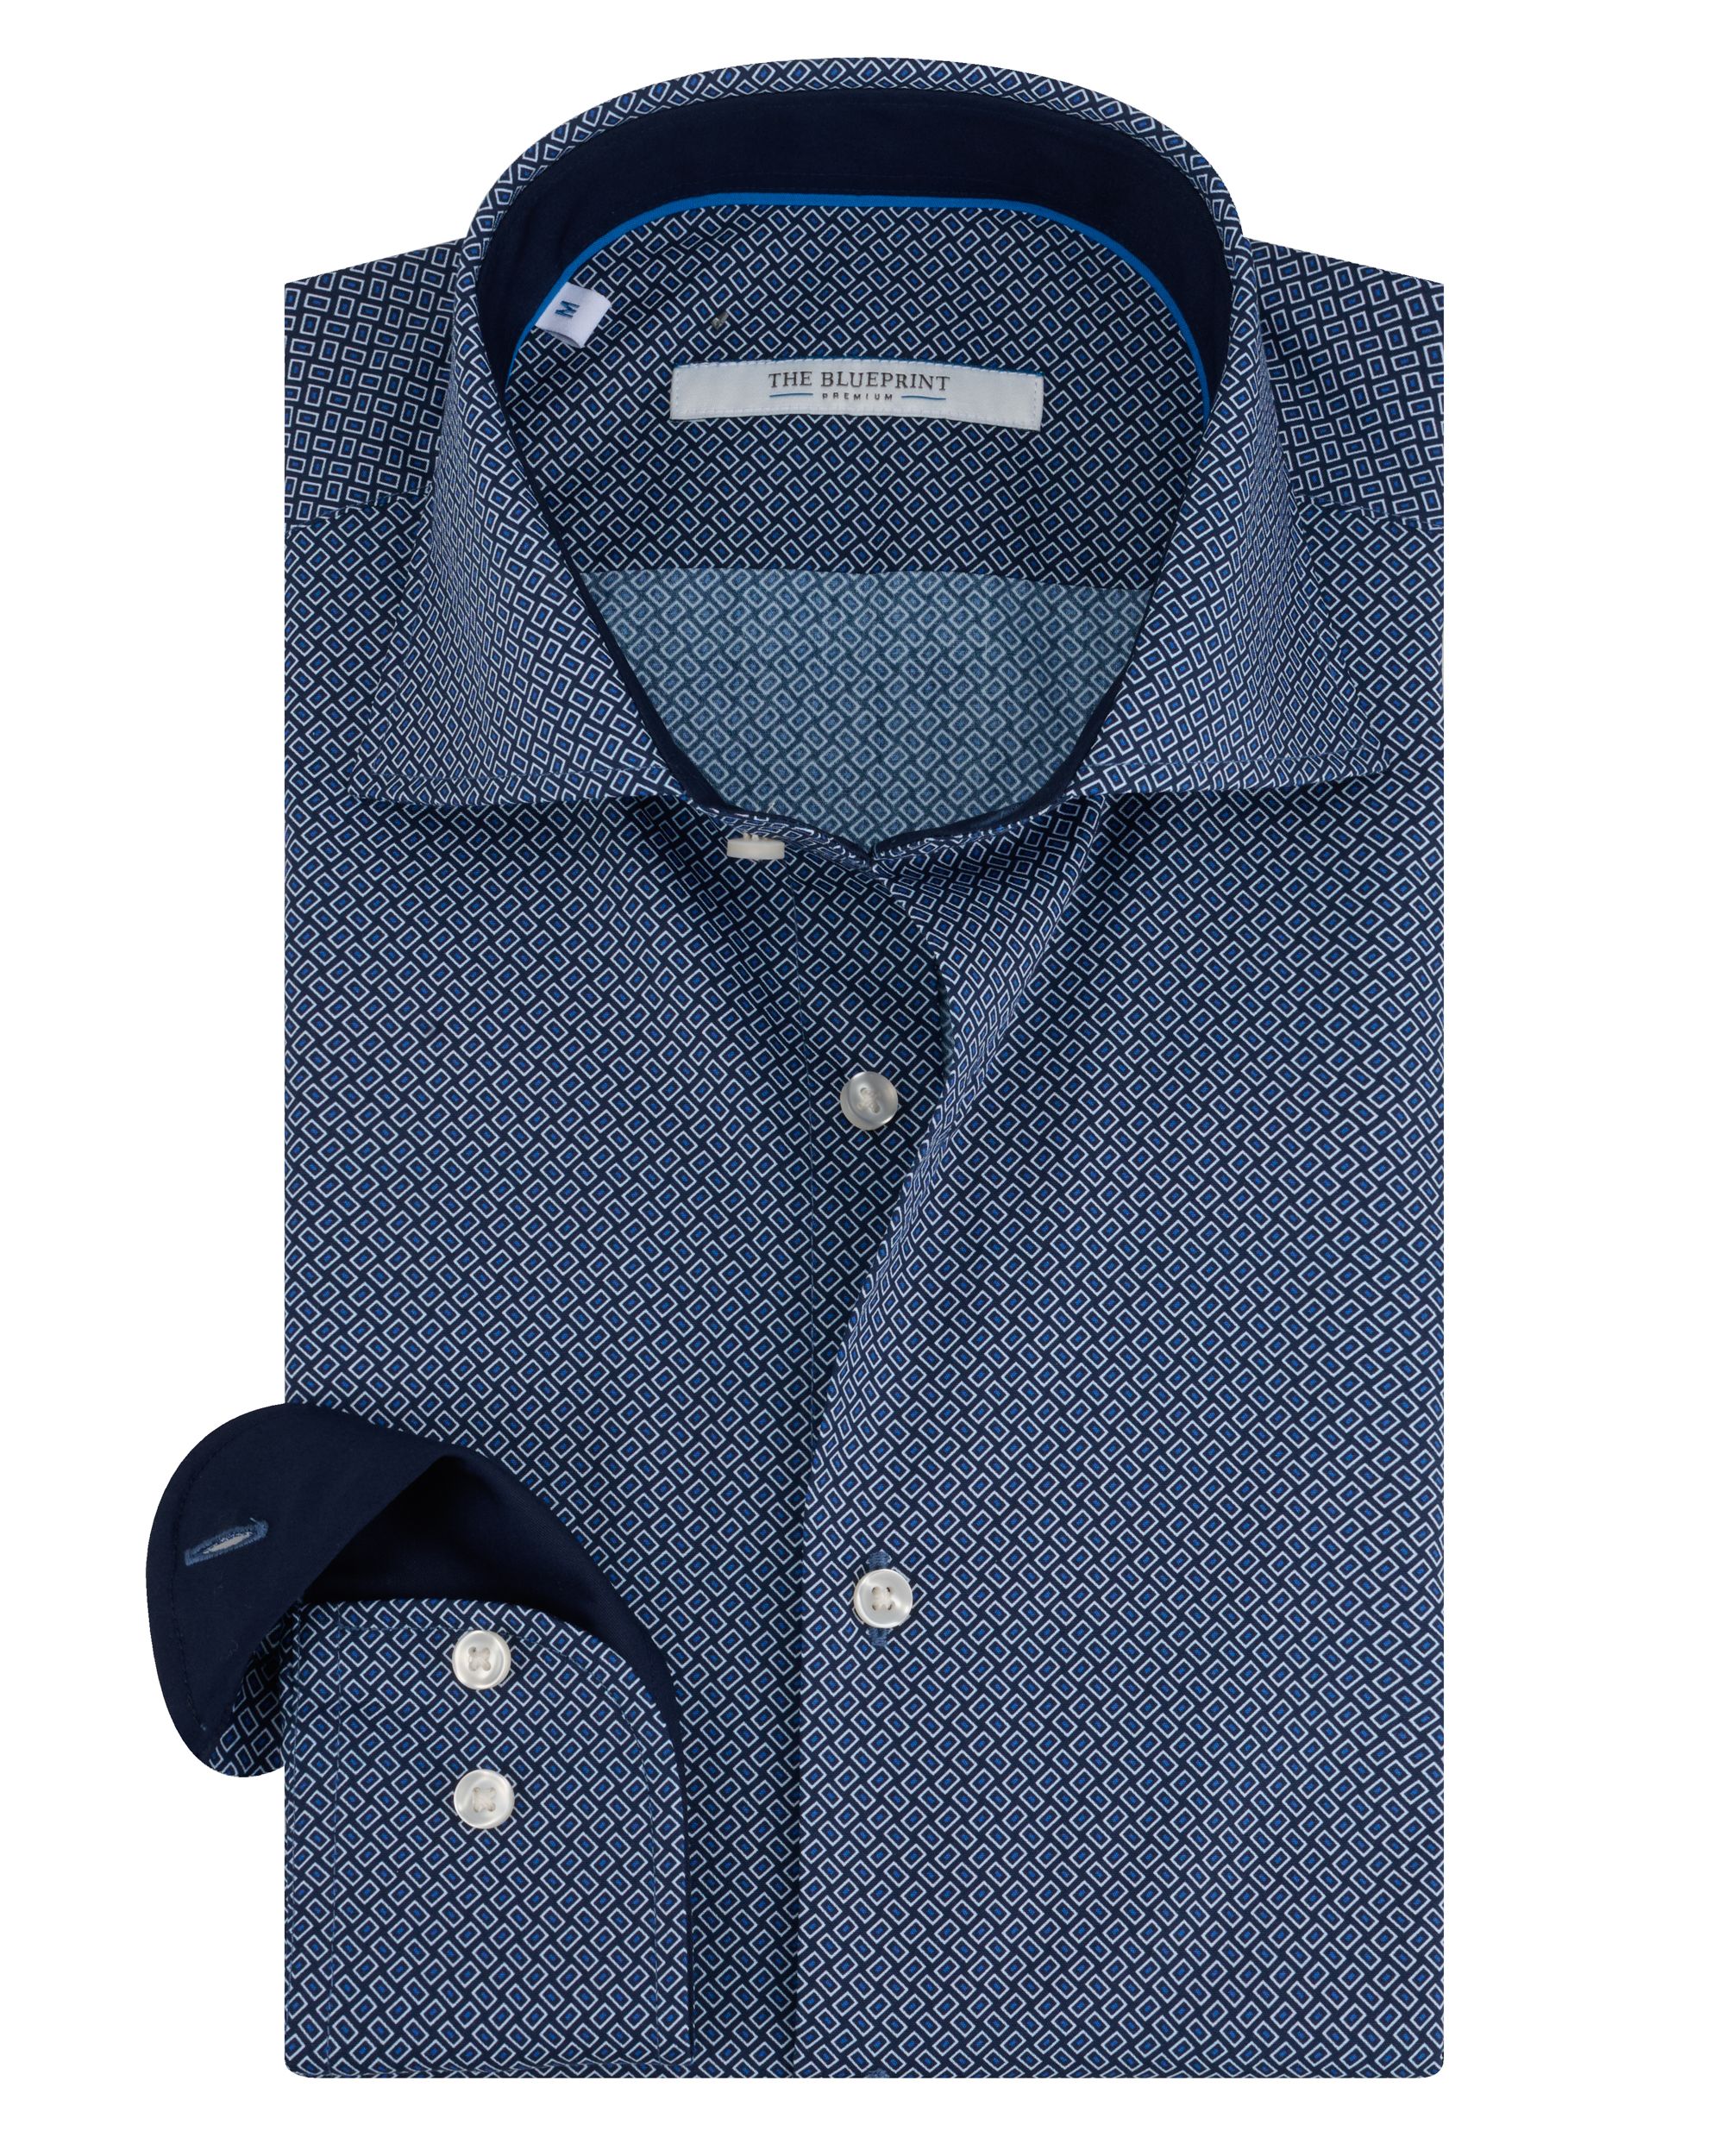 The BLUEPRINT Premium -Trendy Overhemd LM Navy dessin 092068-001-L